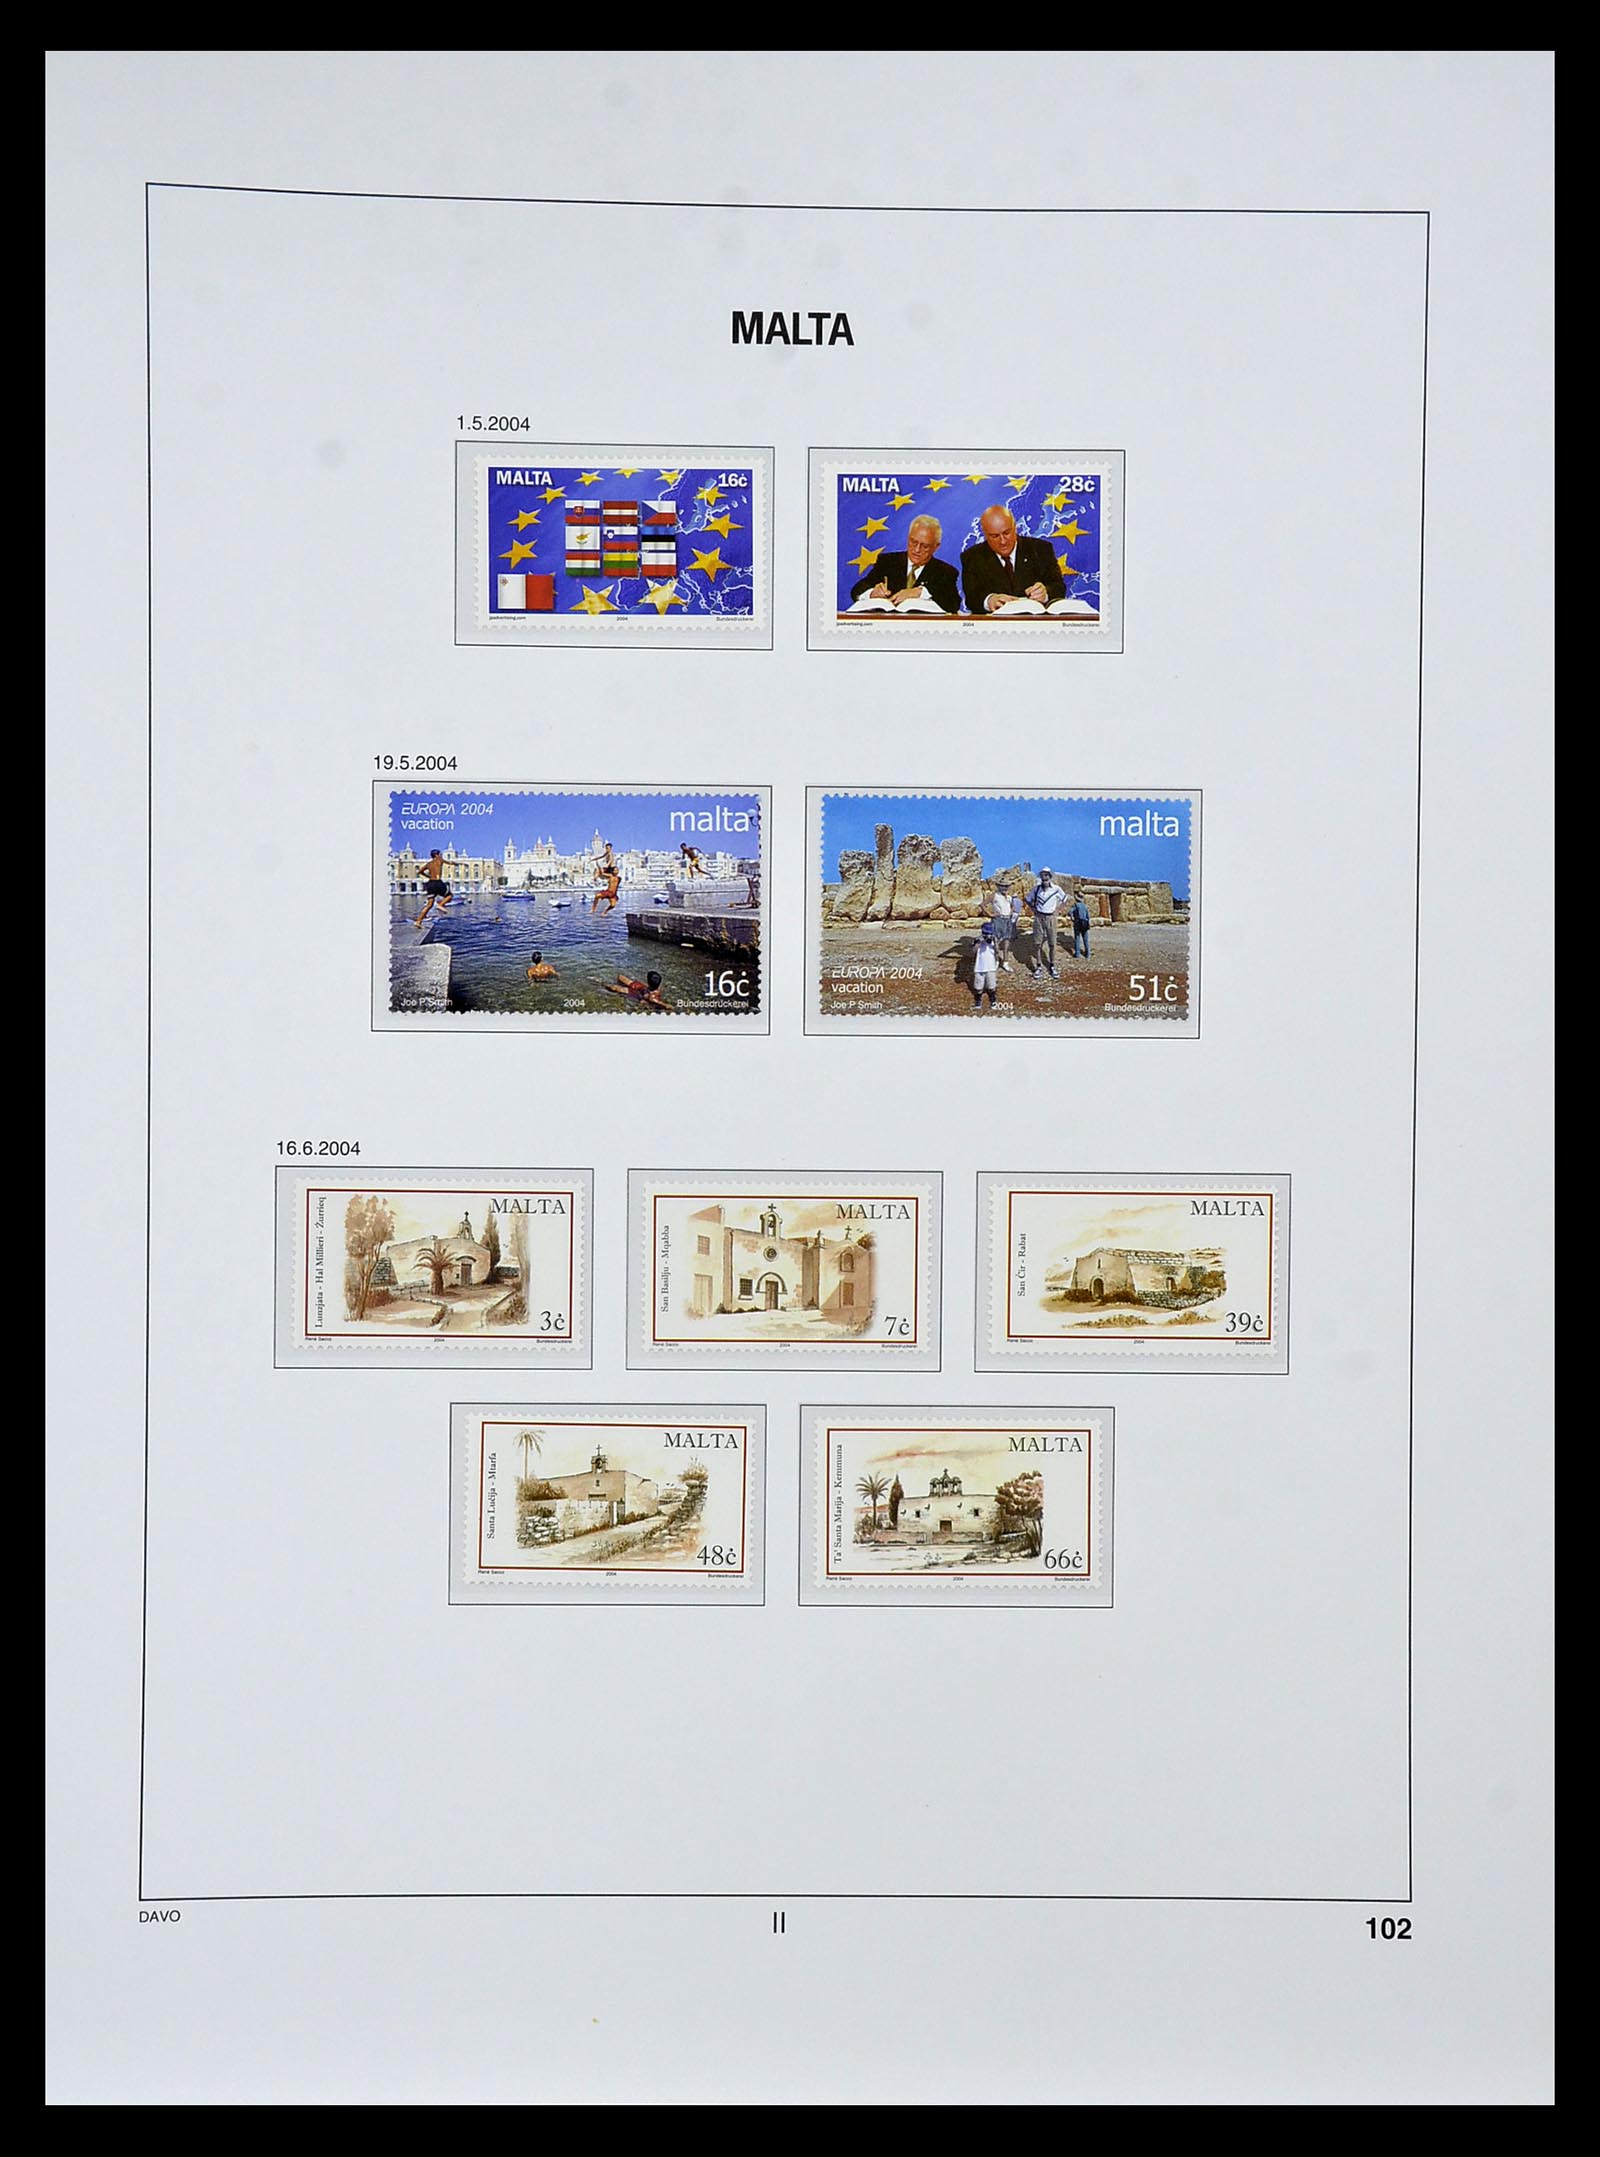 35114 119 - Stamp Collection 35114 Malta 1964-2005.